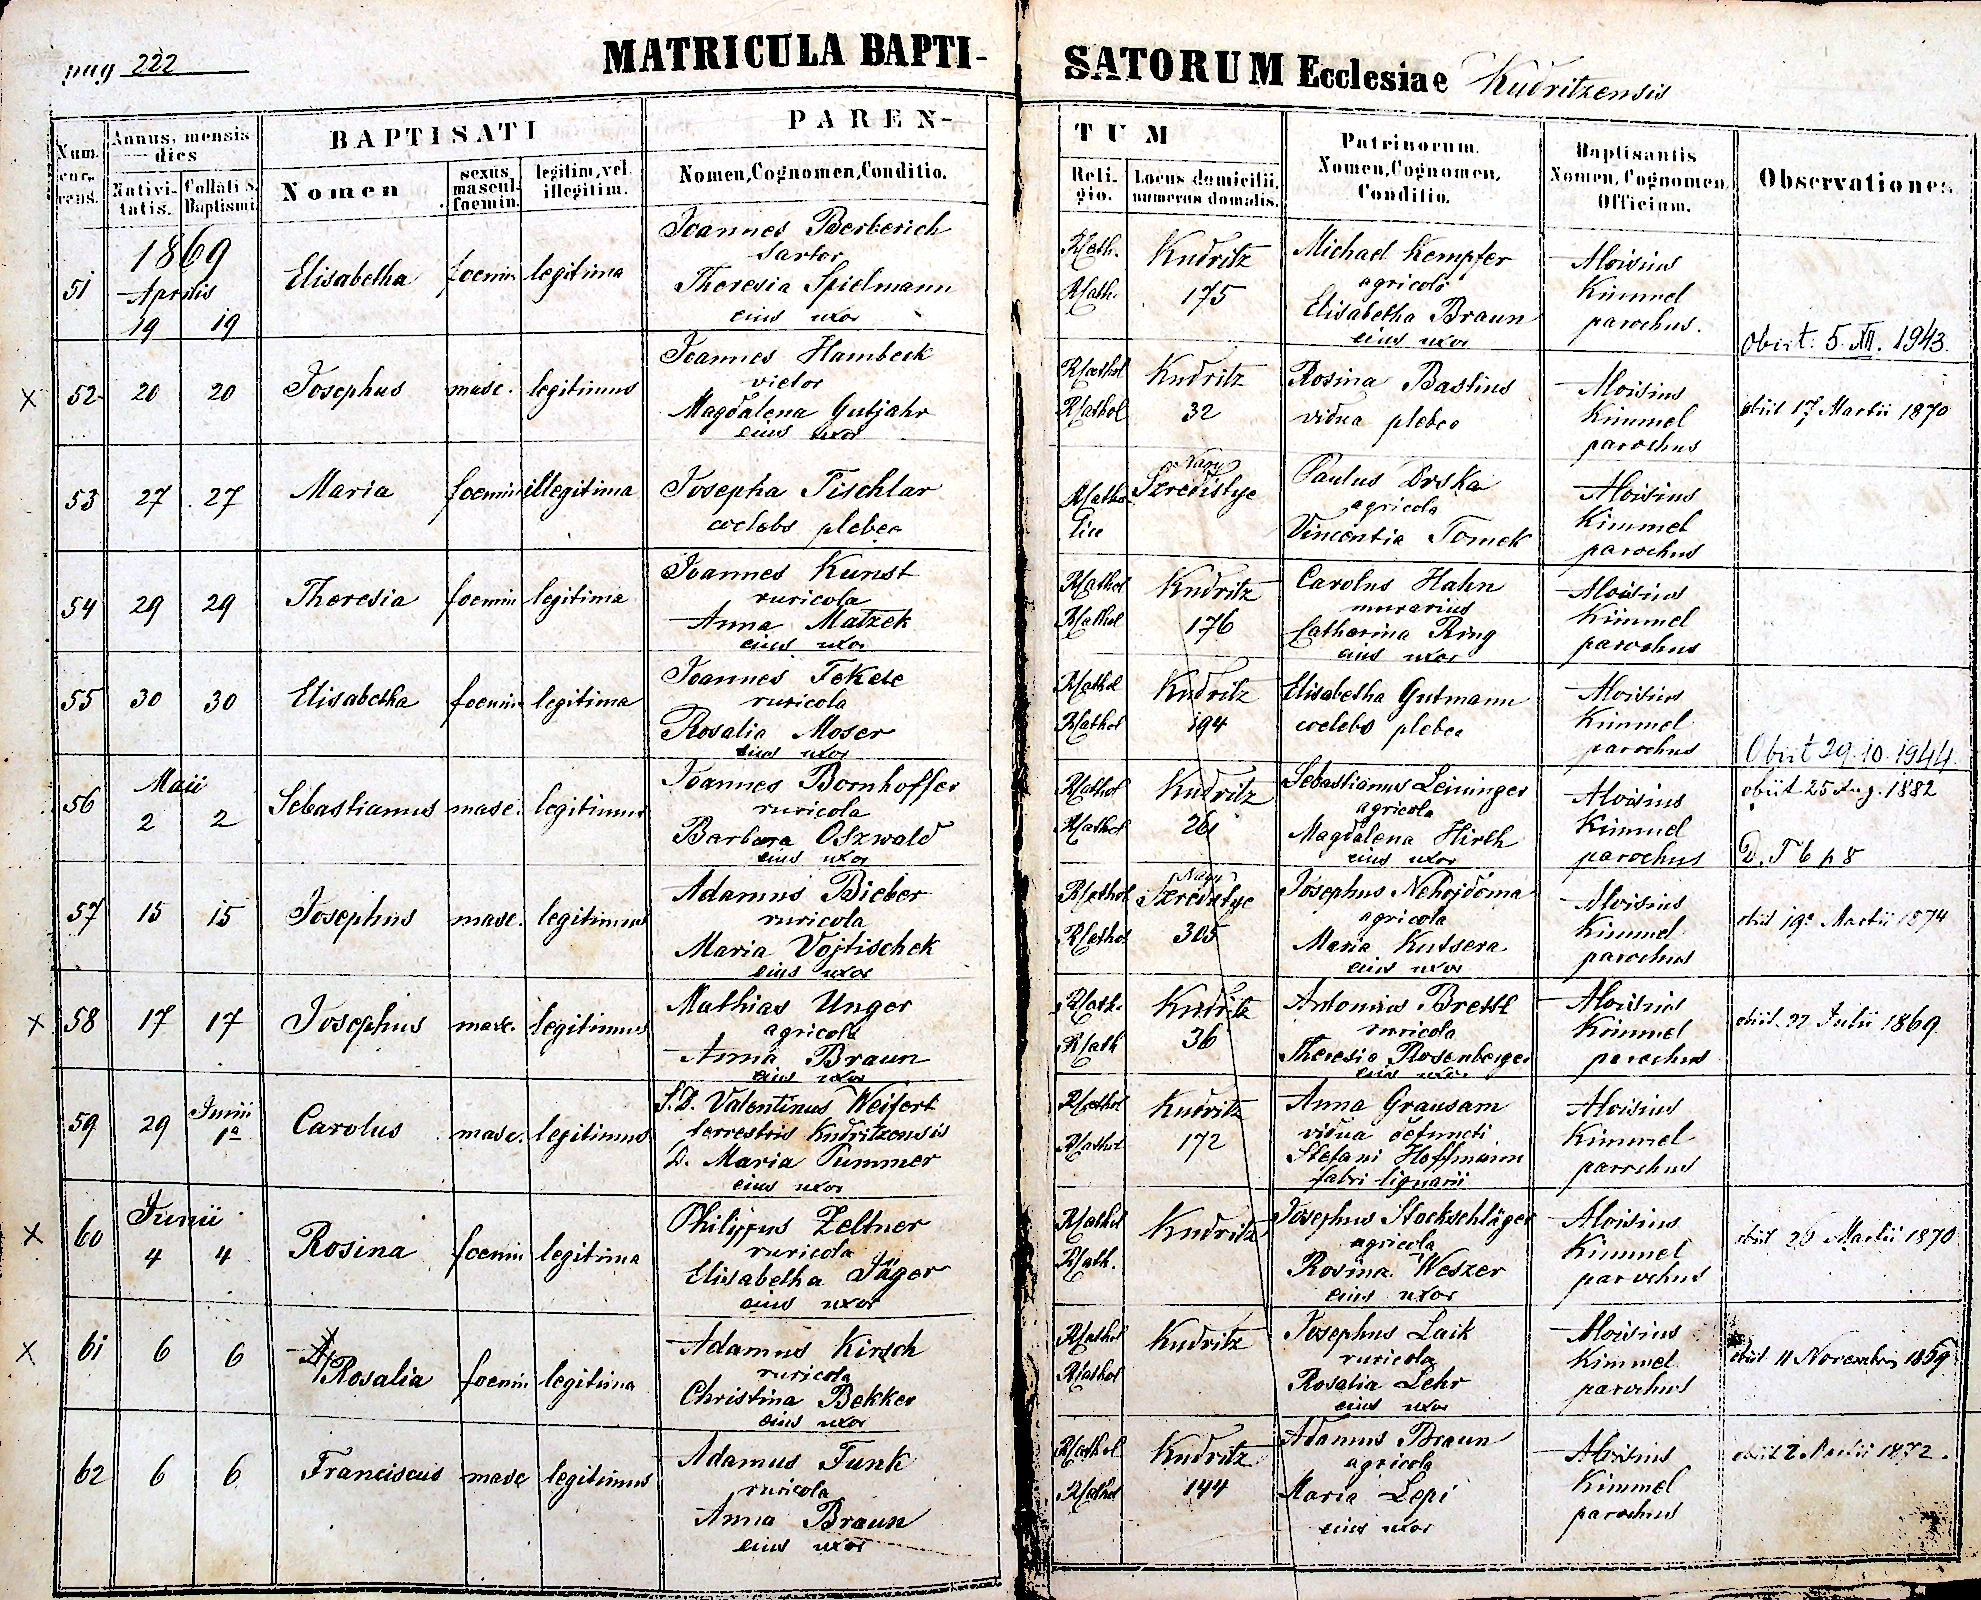 images/church_records/BIRTHS/1852-1870B/222